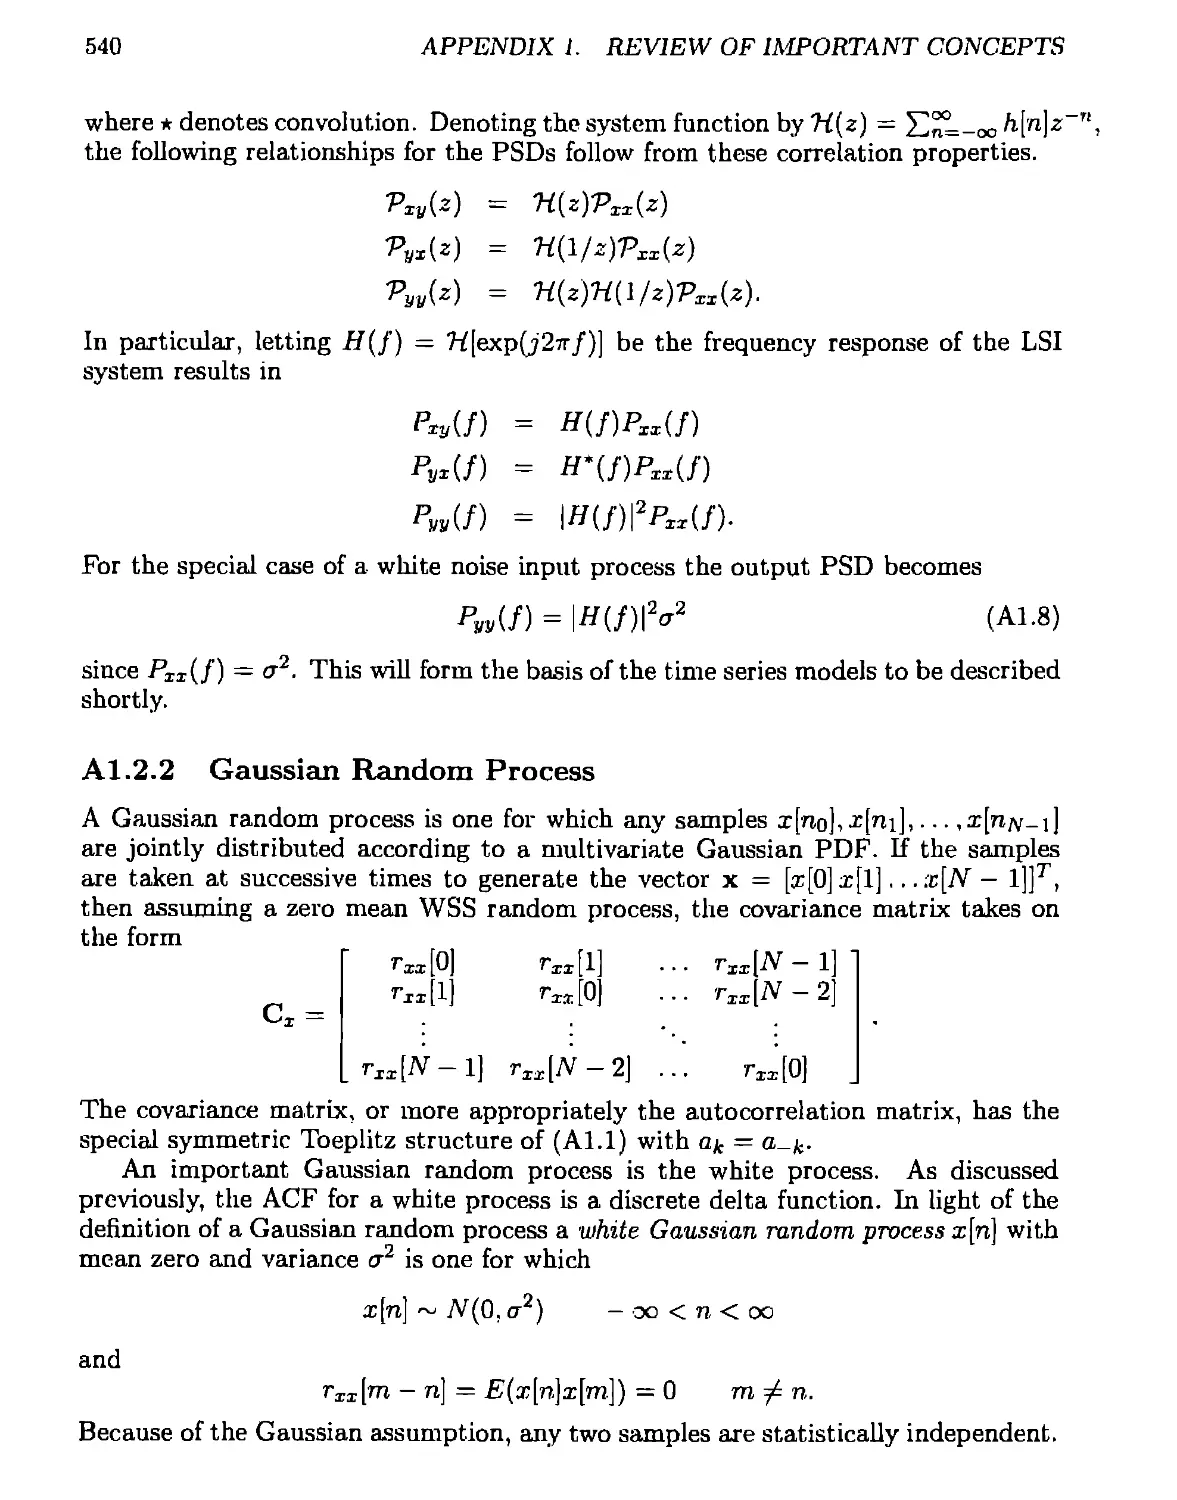 A.1.2.2 Gaussian Random Process